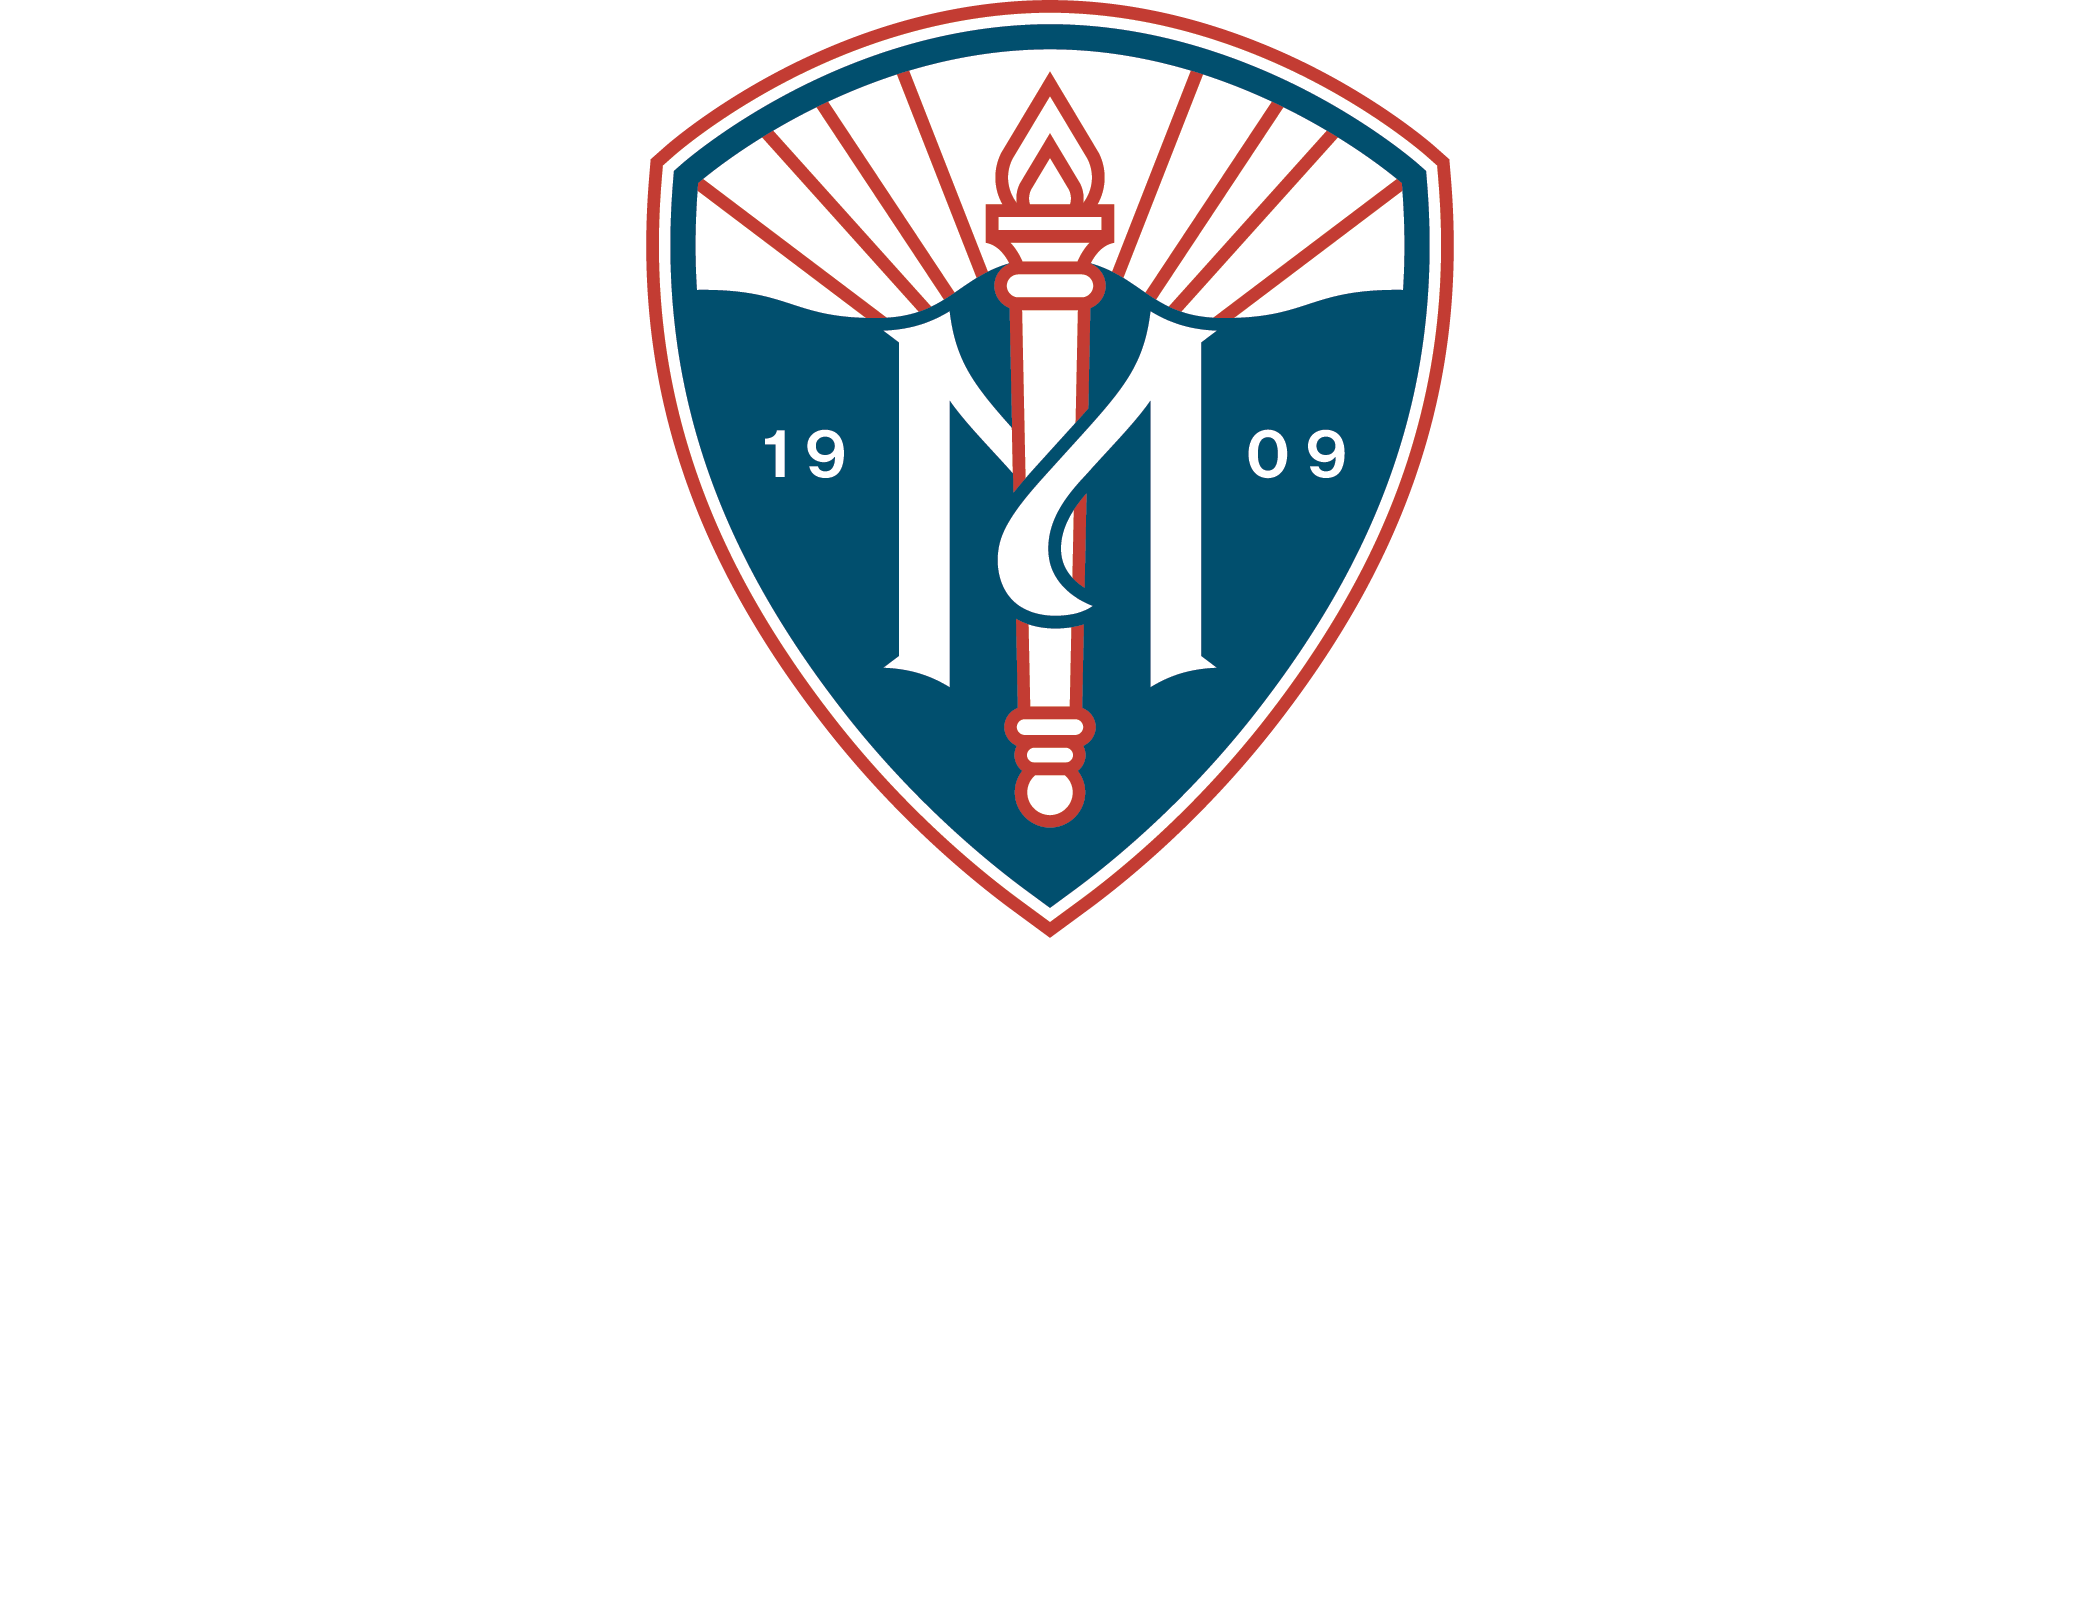 Samuel Merritt University company logo